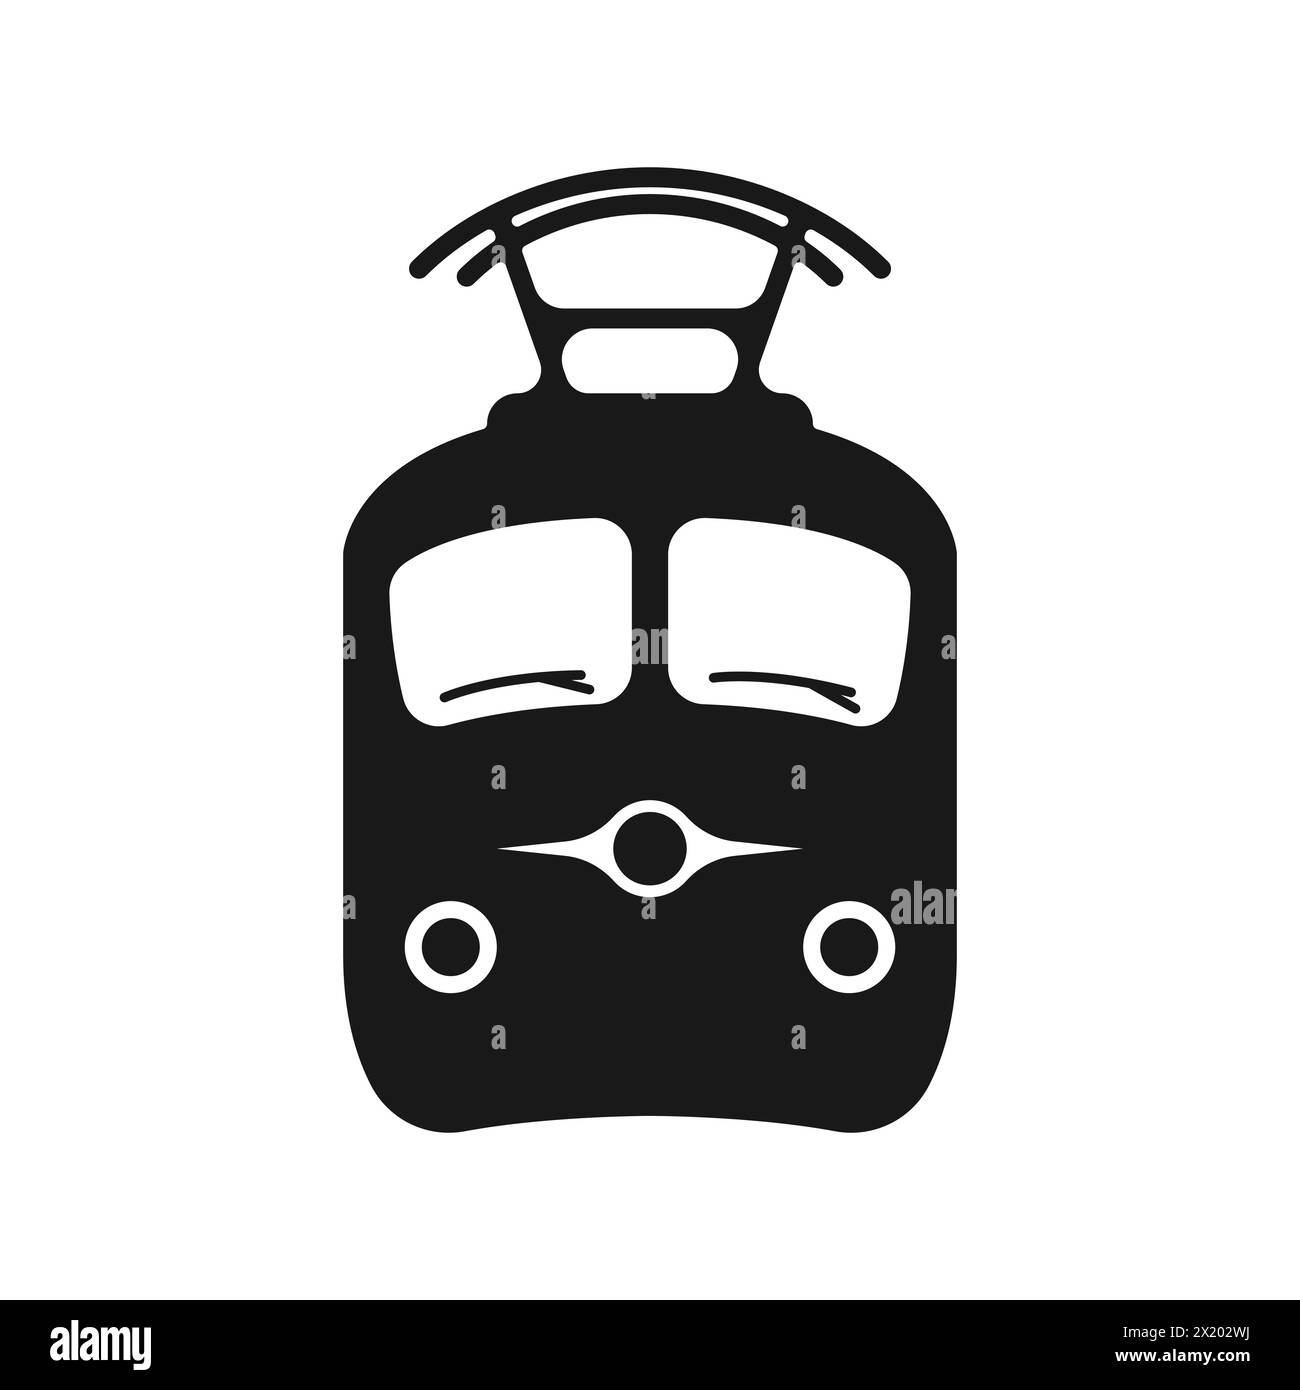 Subway-Silhouette Vektor-Symbol vorn. Öffentliche Verkehrsmittel für Fahrgäste Vektor. Stadtverkehr Straßenbahn schwarz Symbol. Stock Vektor